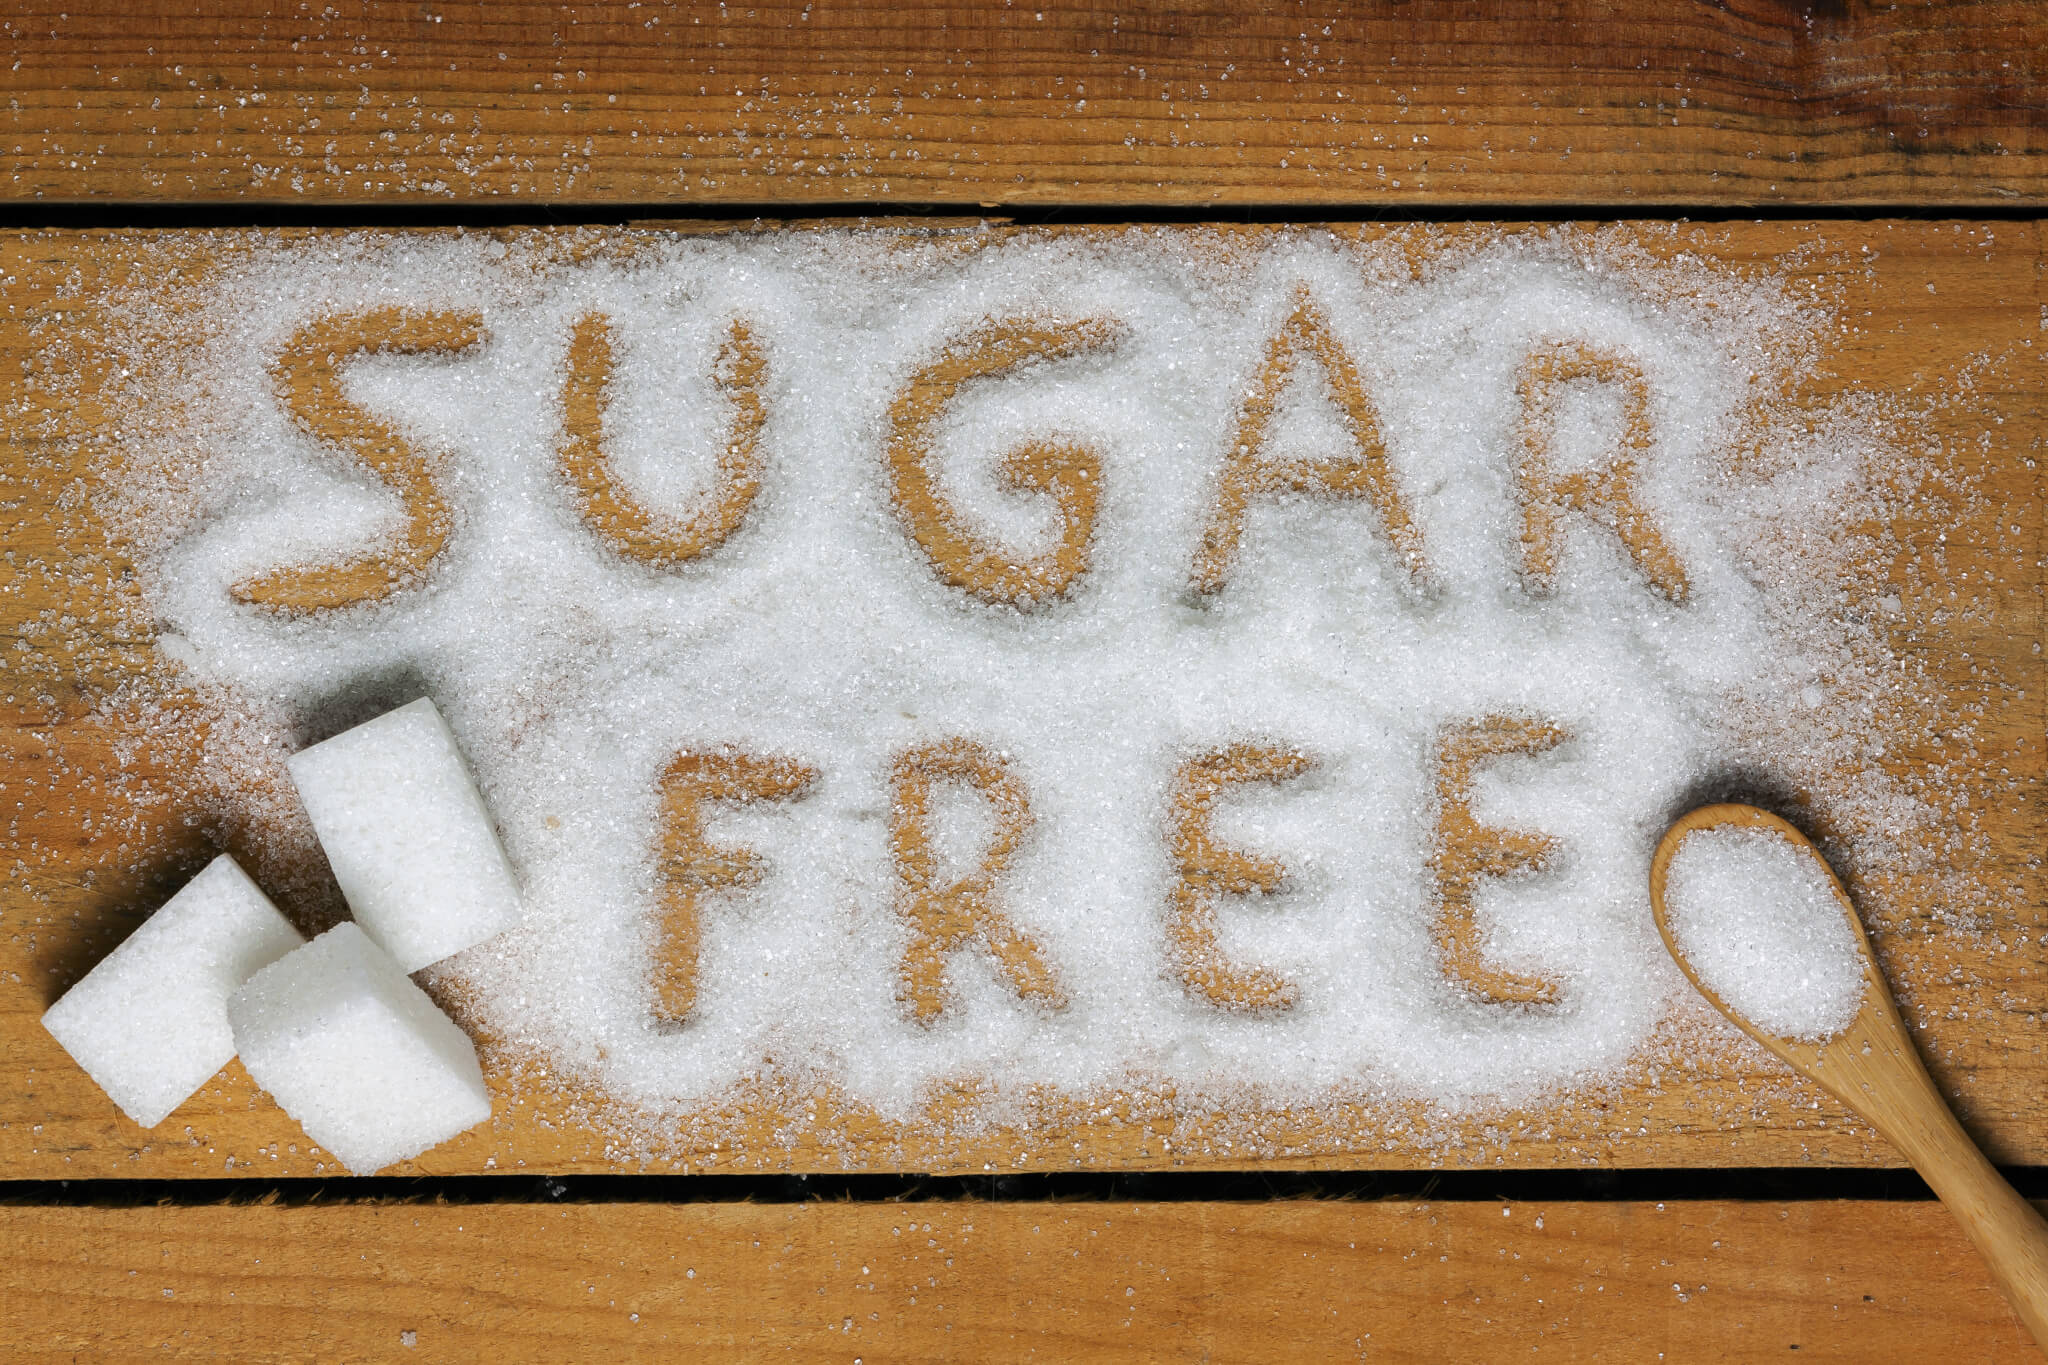 artificial sugar causes weight gain 2017